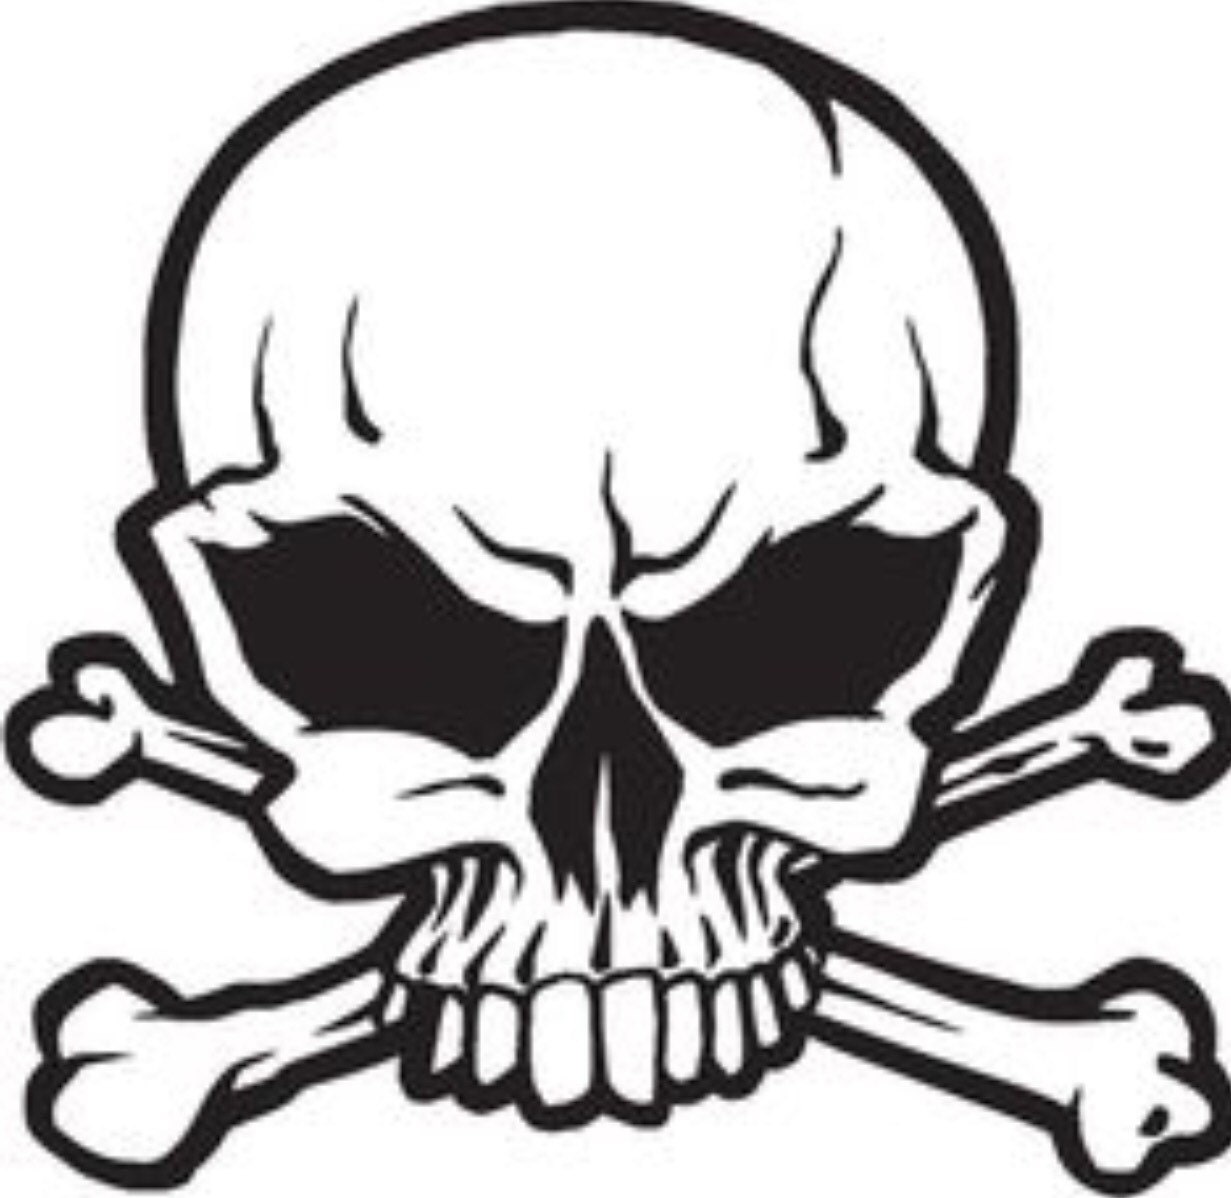 Skull and crossbones decal skull bones vinyl decals